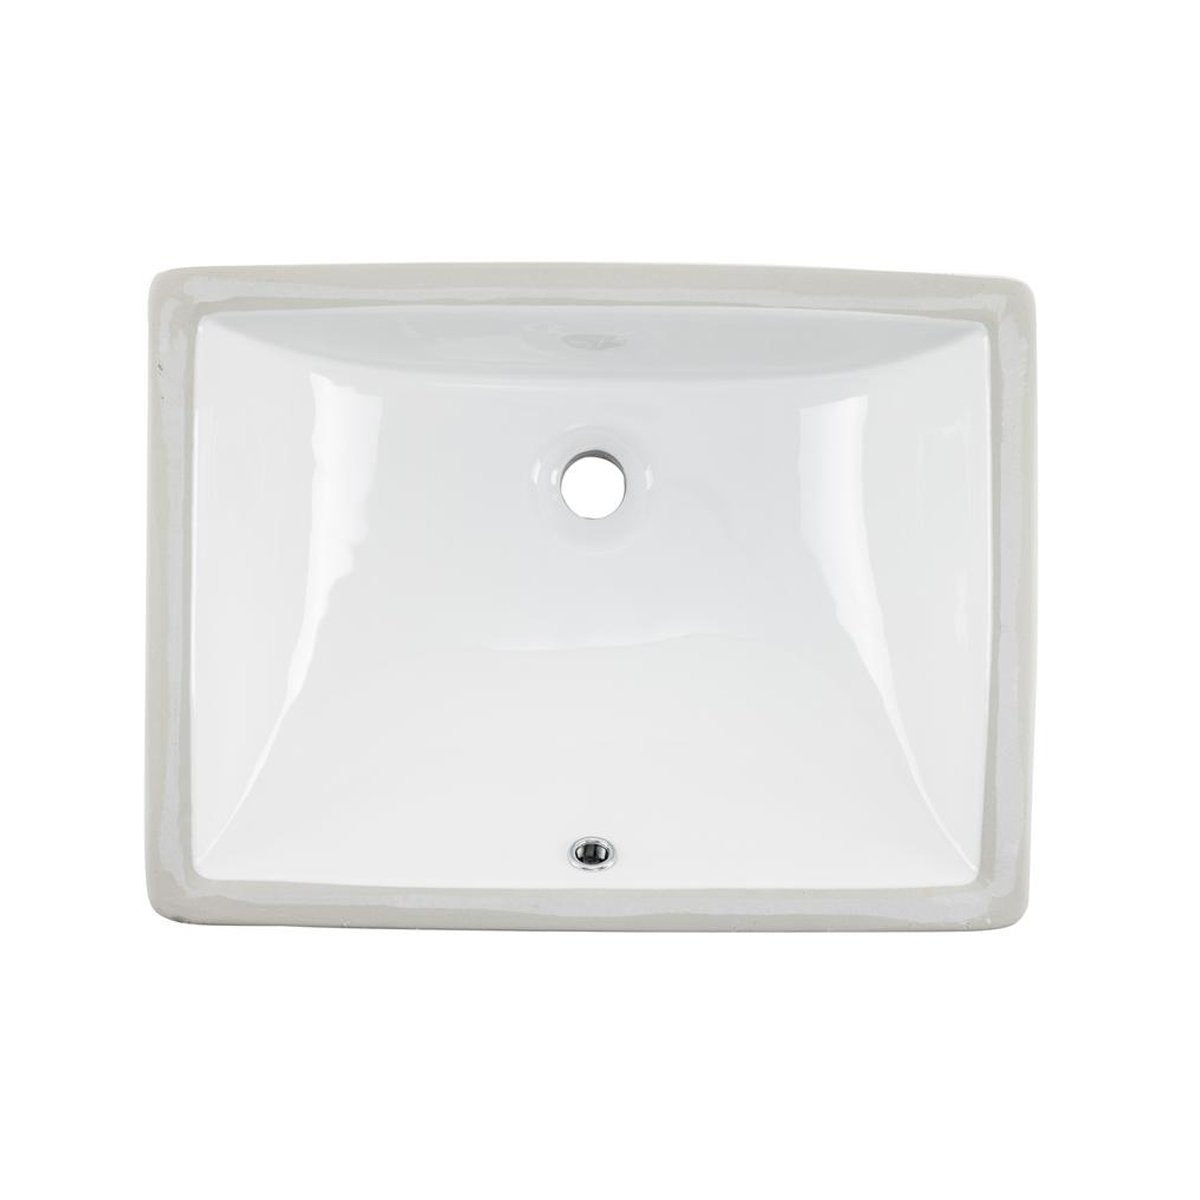 Wells Sinkware 20-Inch Rectangular Undermount Single Bowl Bathroom Sink-Bathroom Sinks Fast Shipping at Directsinks.